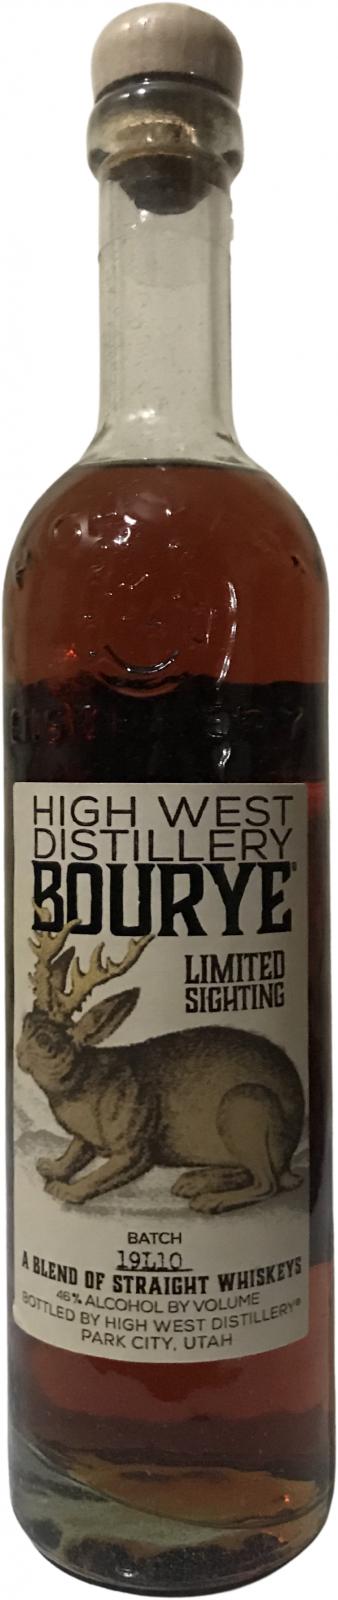 High West Bourye Limited Sighting BOUrbon & RYE New Charred Oak Batch 19L10 46% 750ml